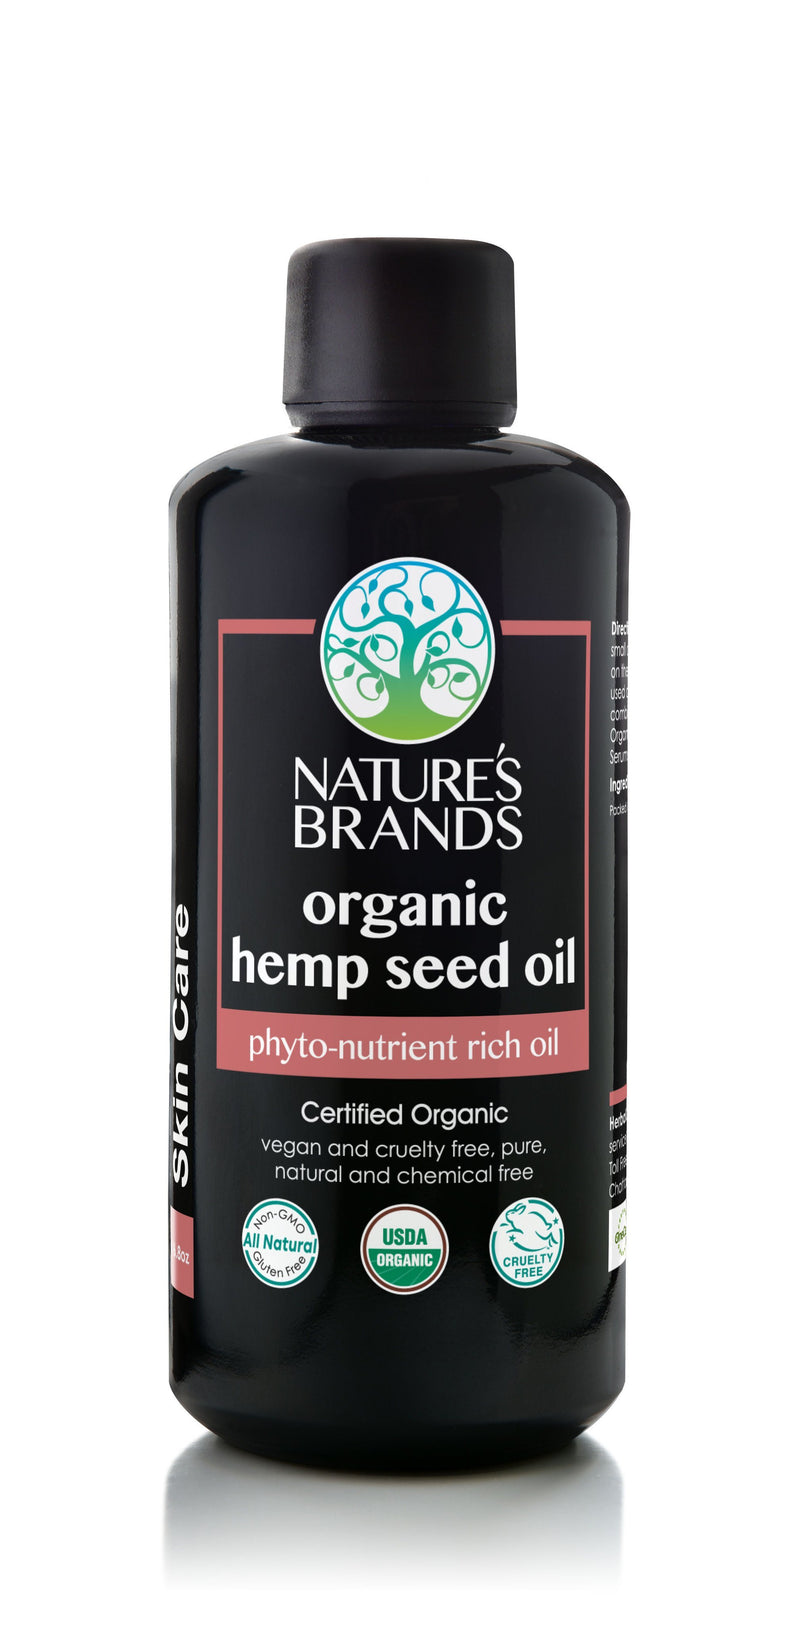 Herbal Choice Mari Organic Hemp Seed Oil - Herbal Choice Mari Organic Hemp Seed Oil - Herbal Choice Mari Organic Hemp Seed Oil